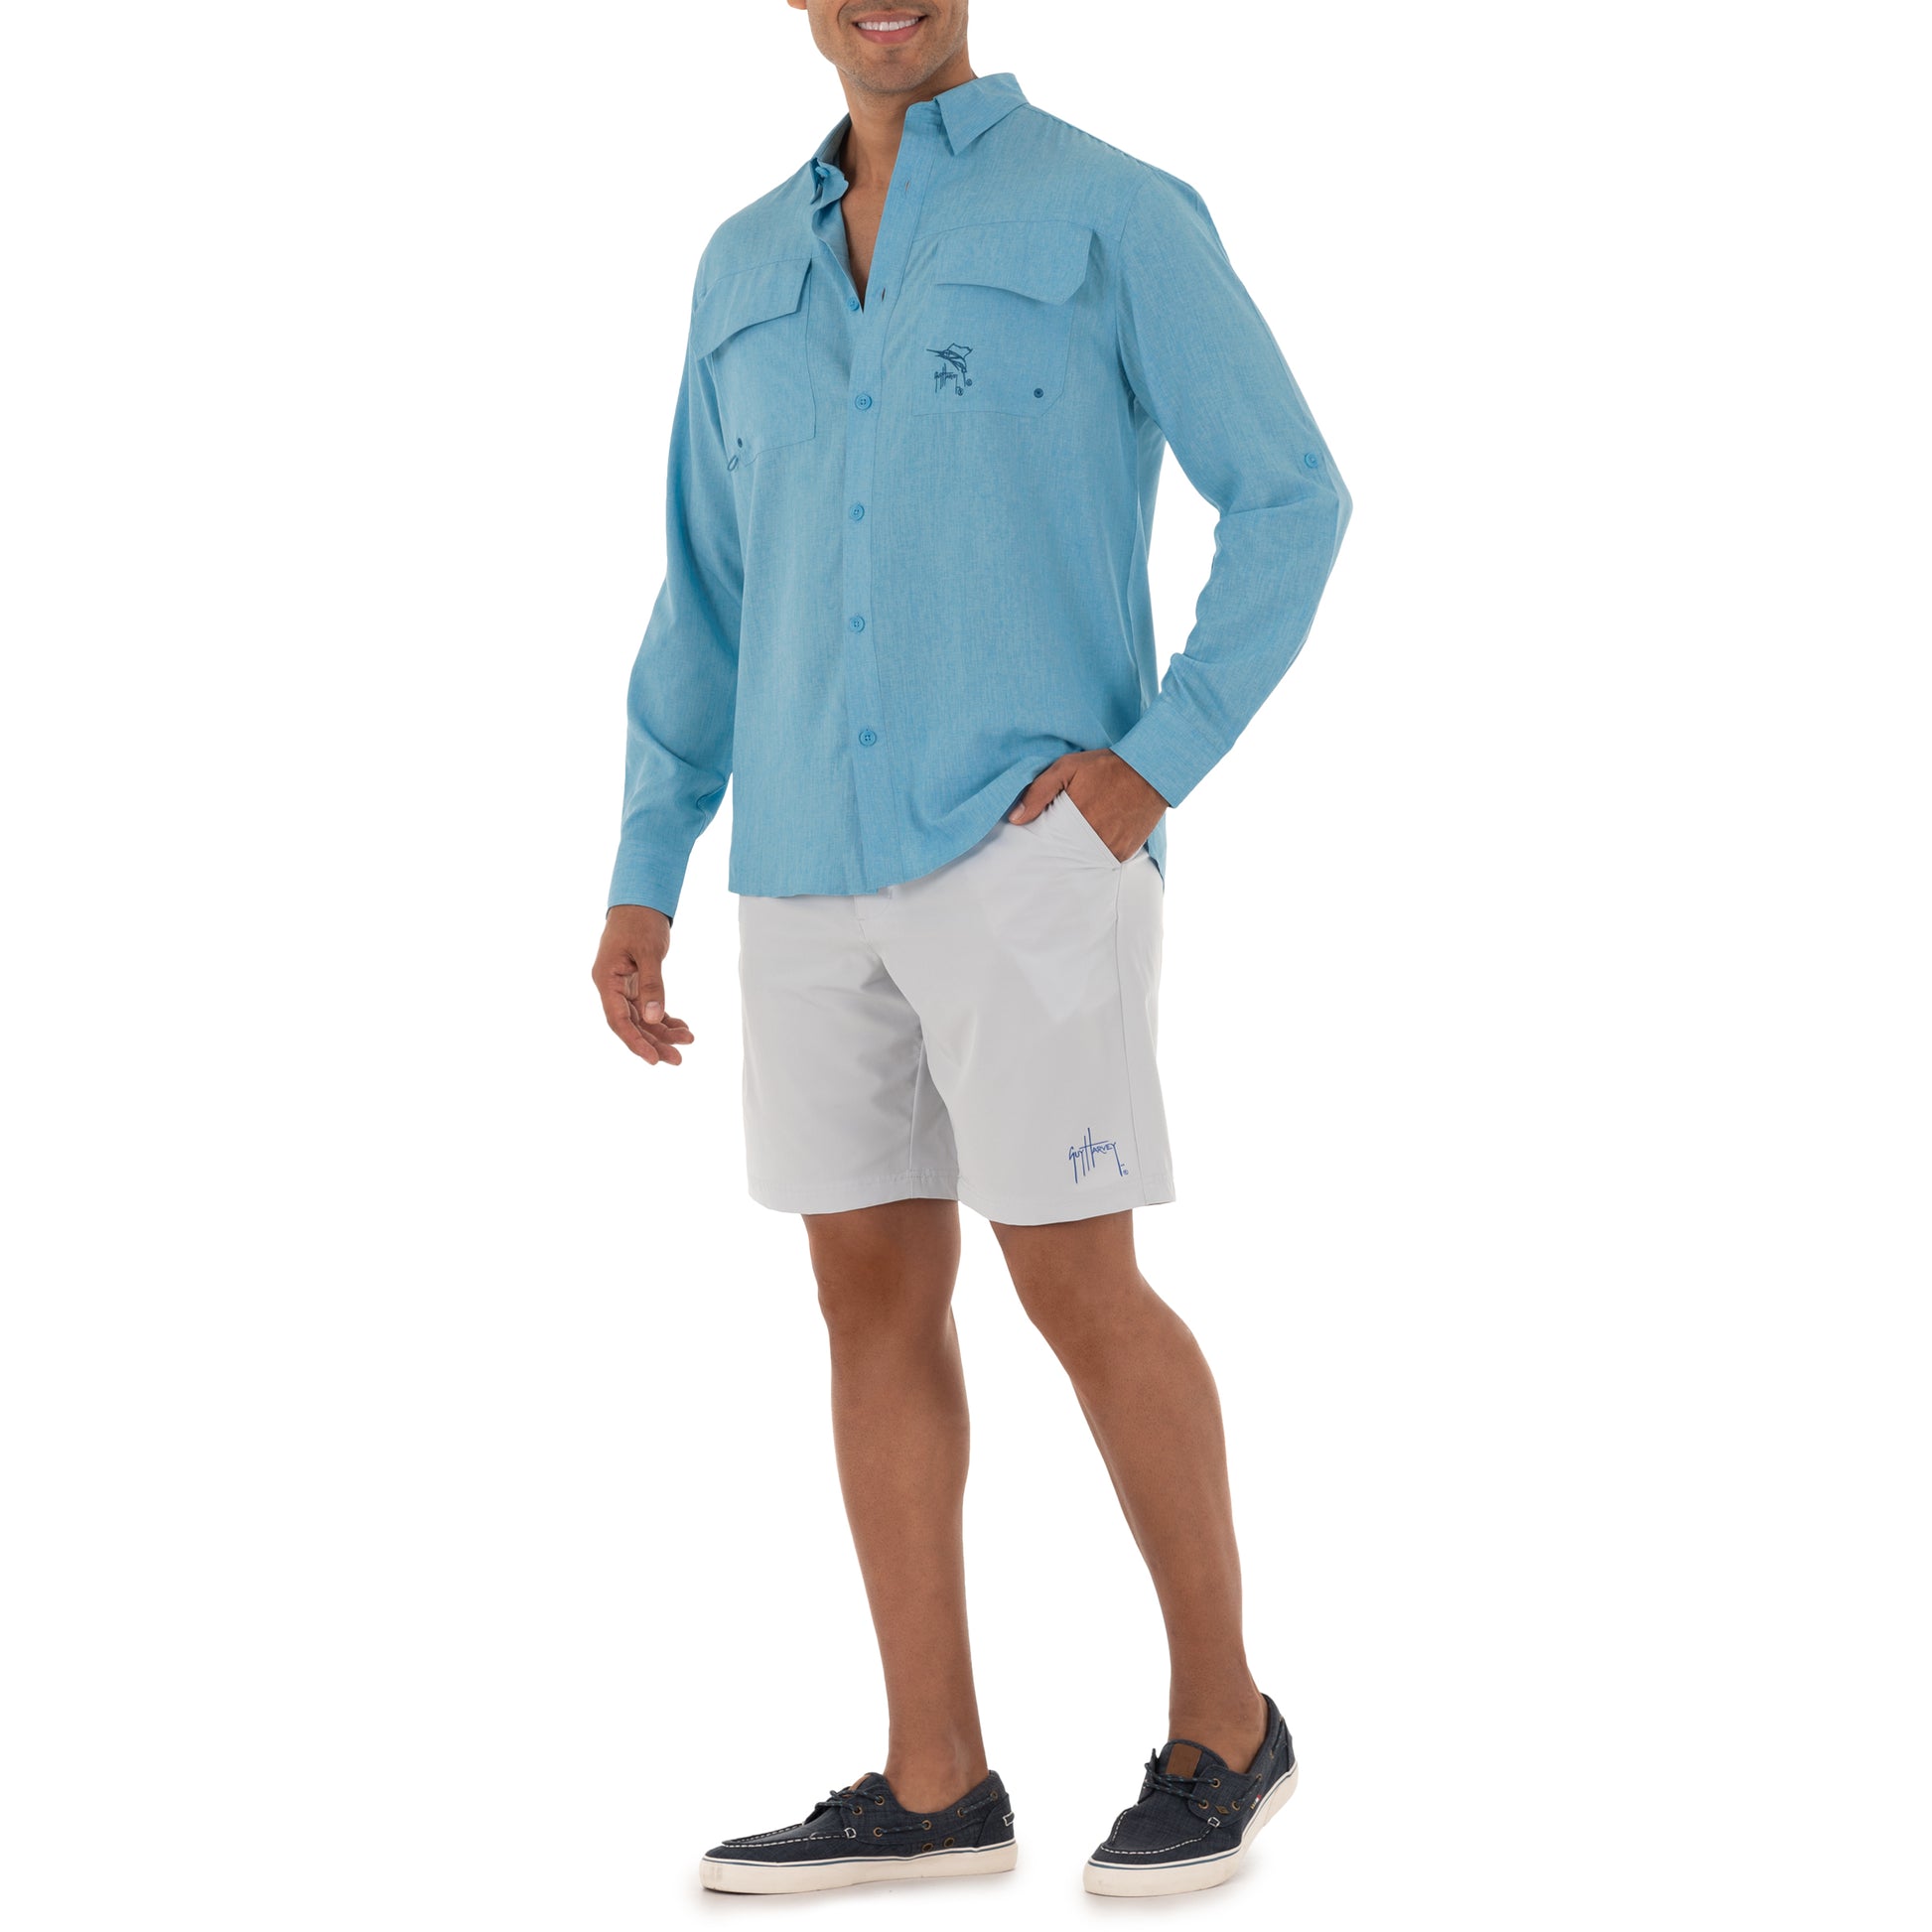 Guy Harvey | Men's Long Sleeve Heather Textured Cationic Blue Fishing Shirt, Medium